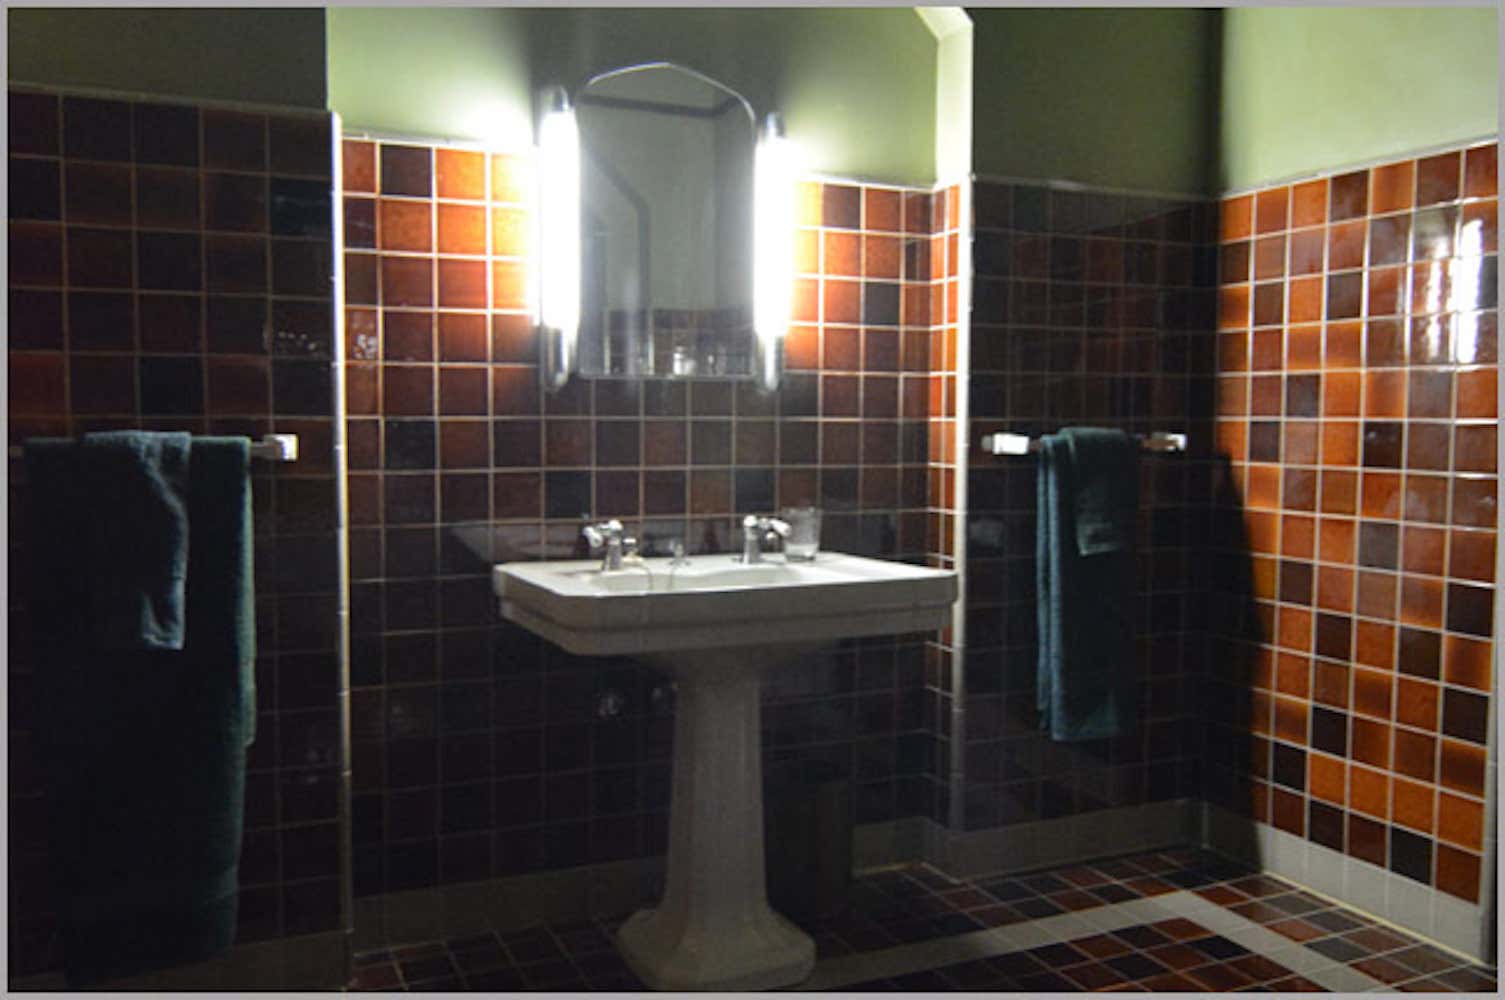 Mid-Century Modern Bathroom